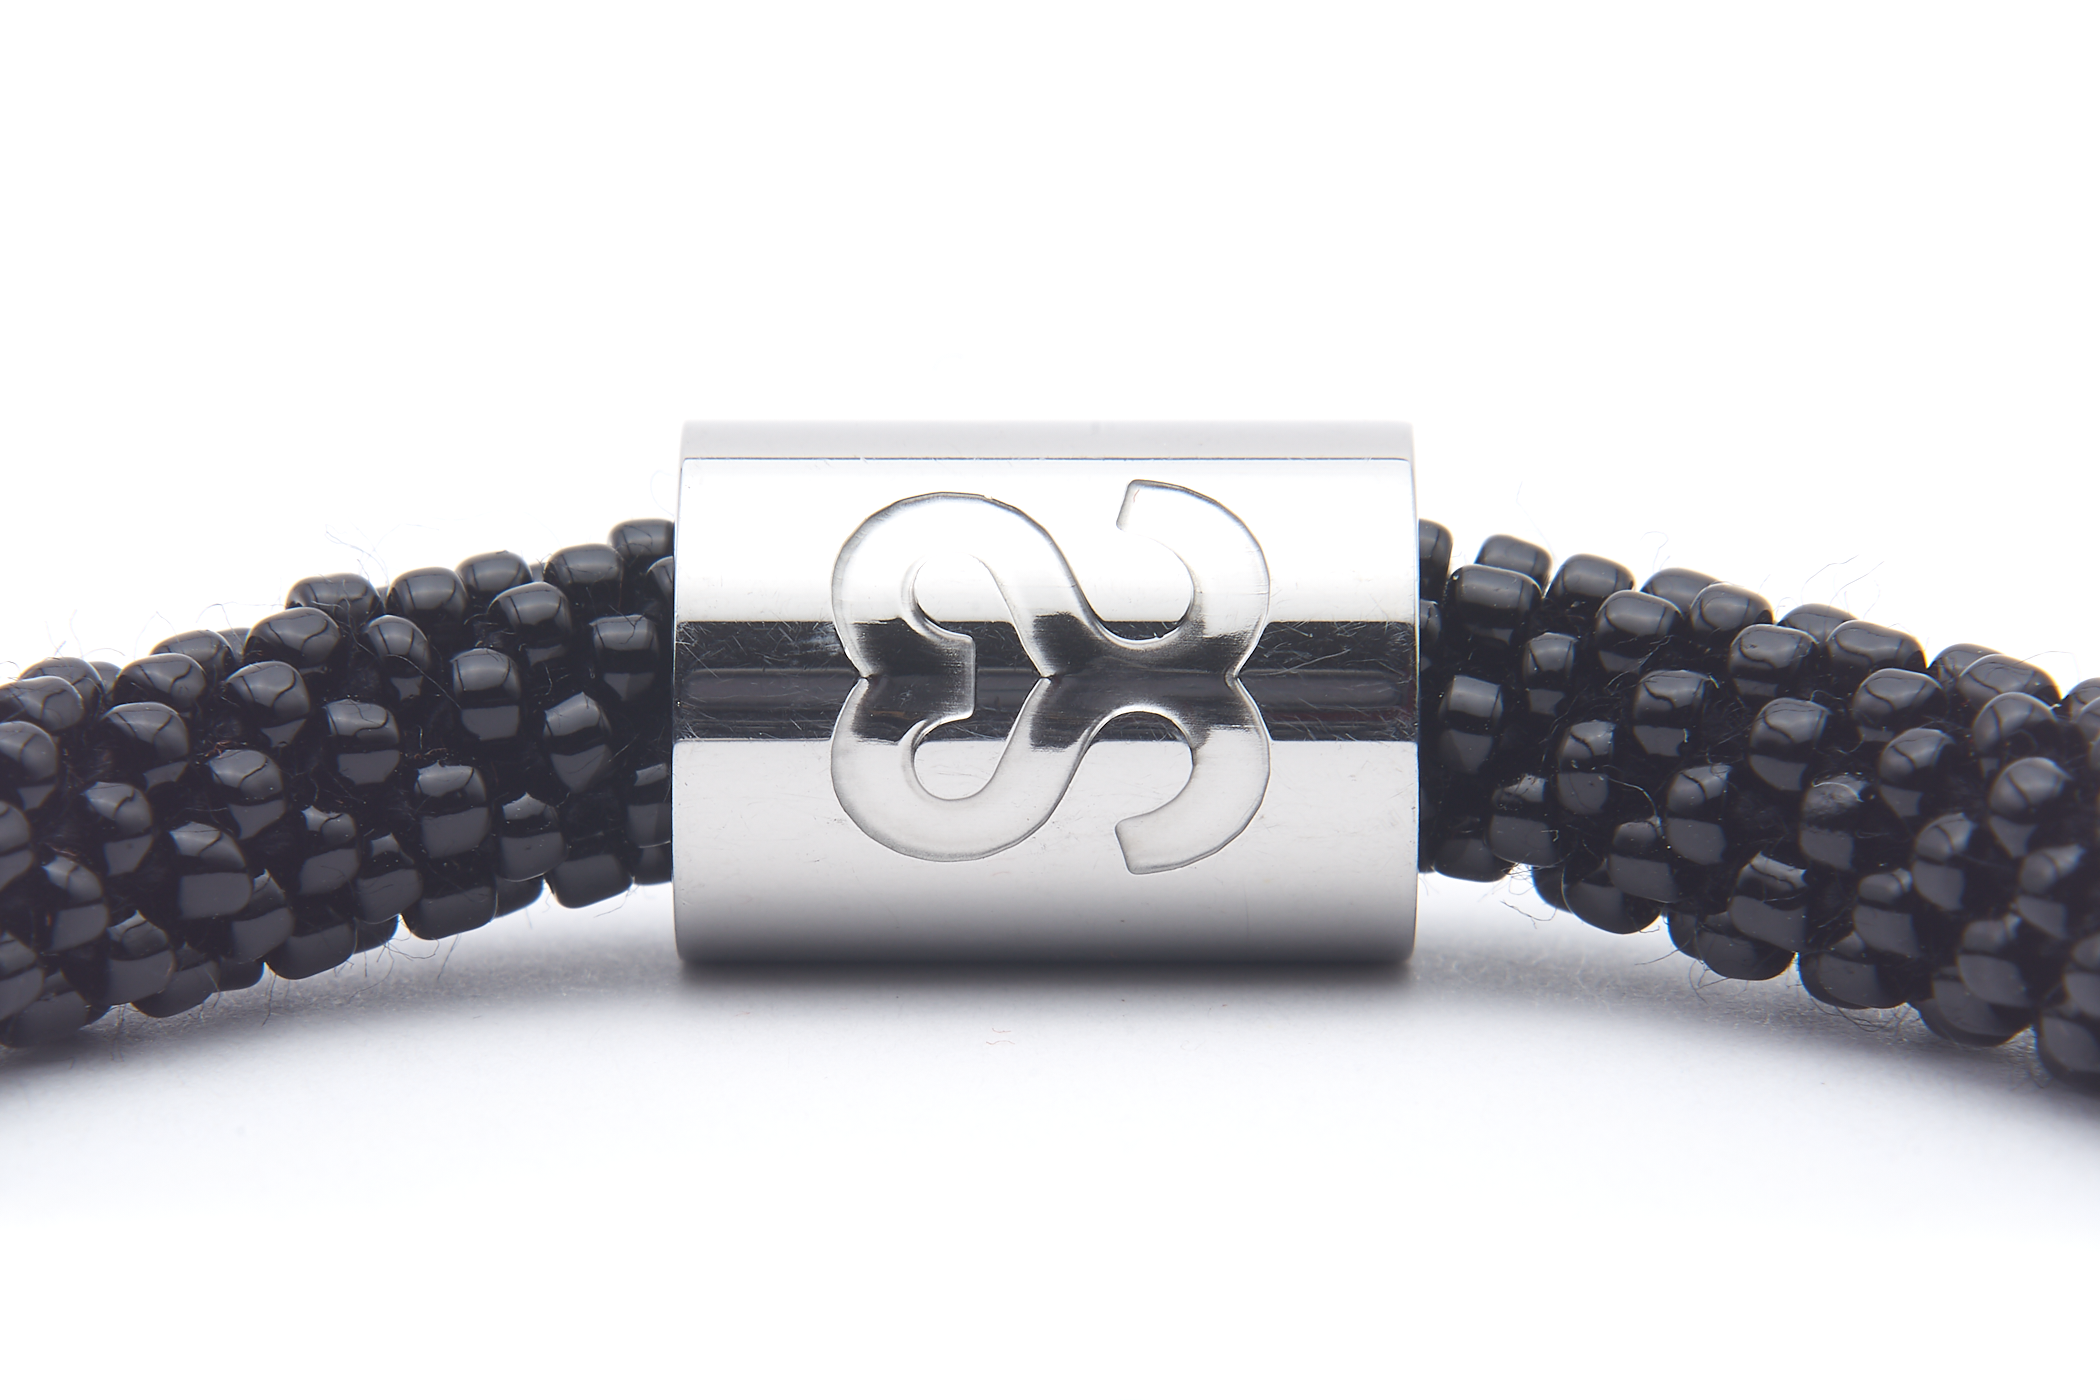 Sashka Co. Extended 8" Bracelet Black w/ Silver Focus Charm Focus Charm Bracelet - Extended 8"